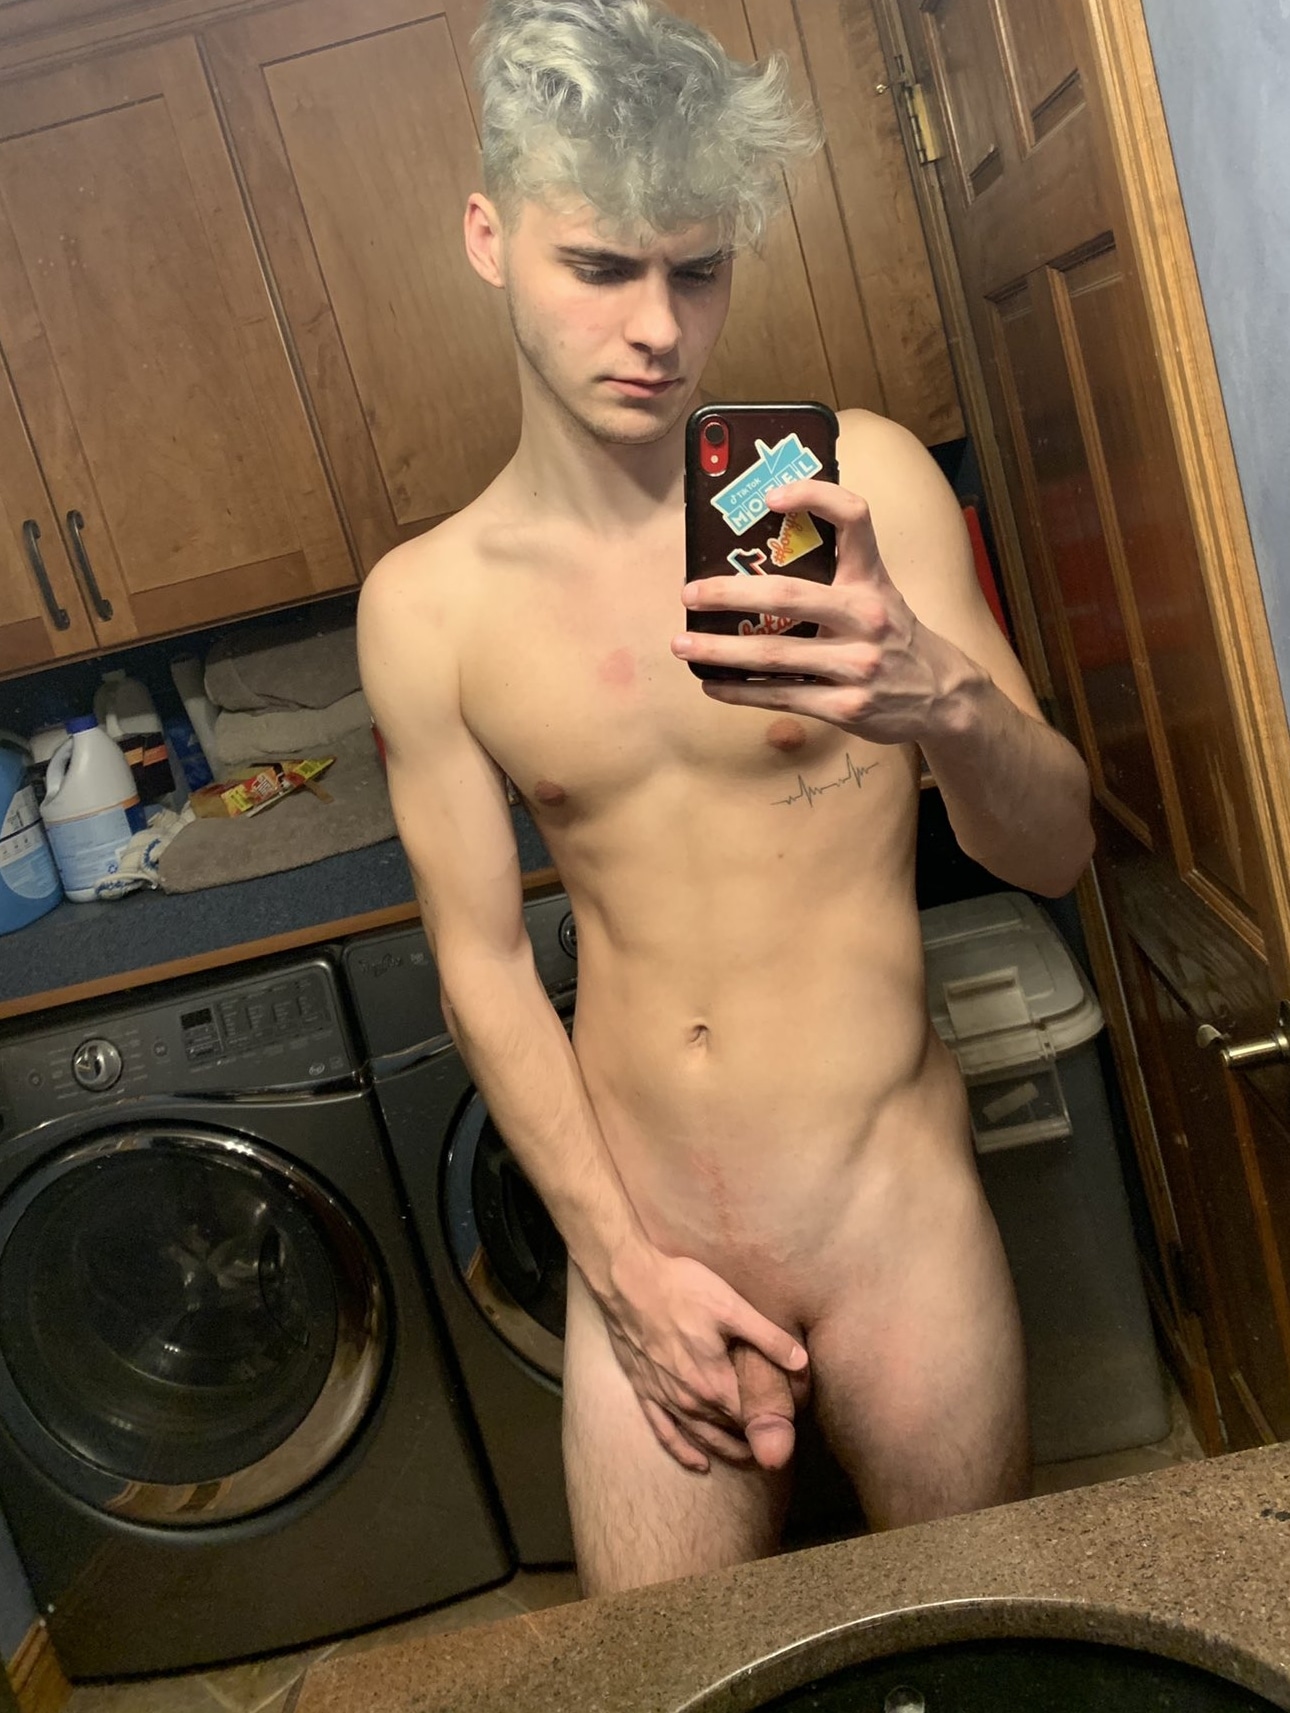 Sexy boy taking a selfie